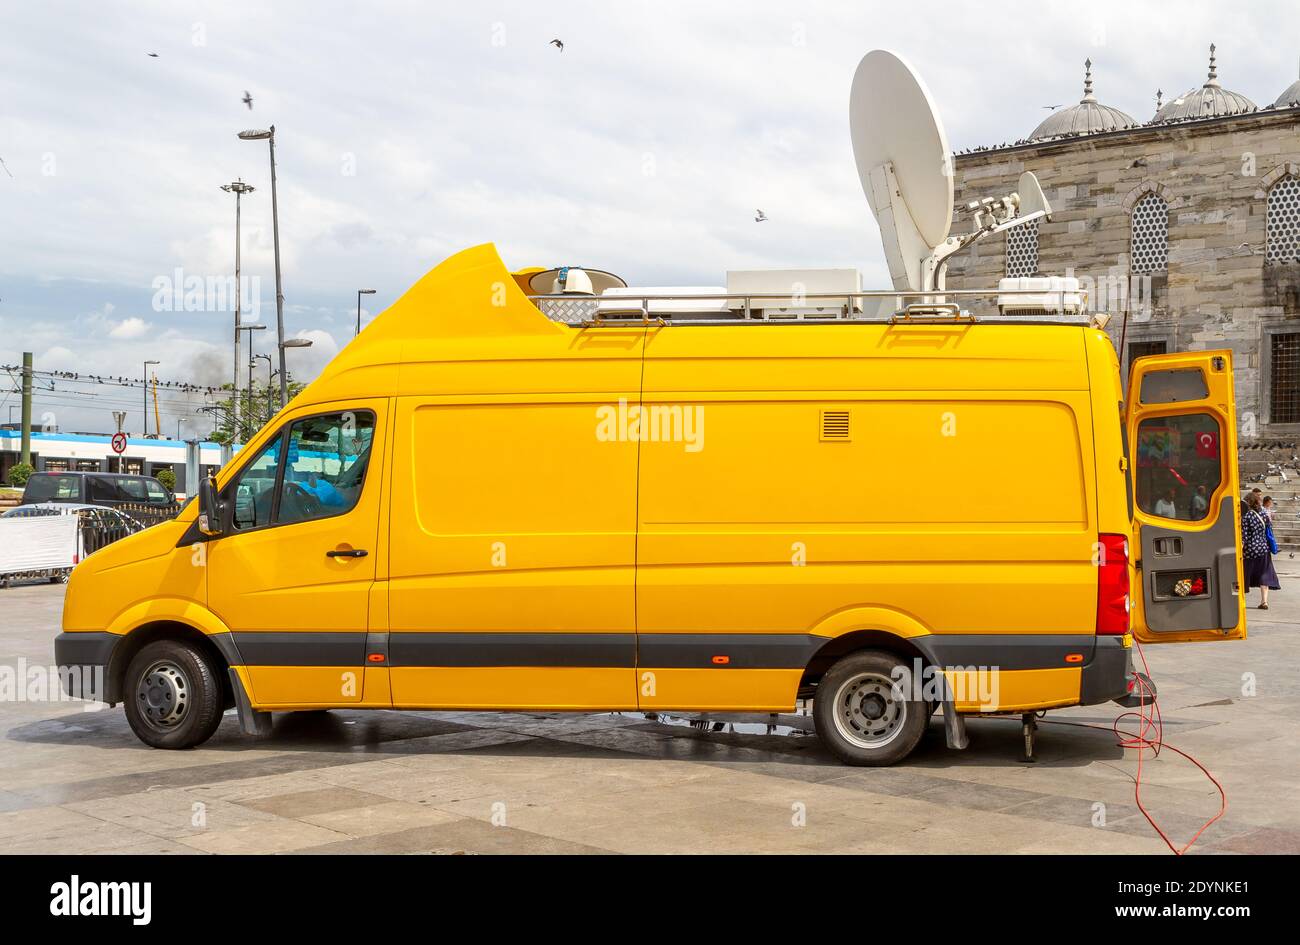 Live broadcast vehicle in Eminonu Square Stock Photo